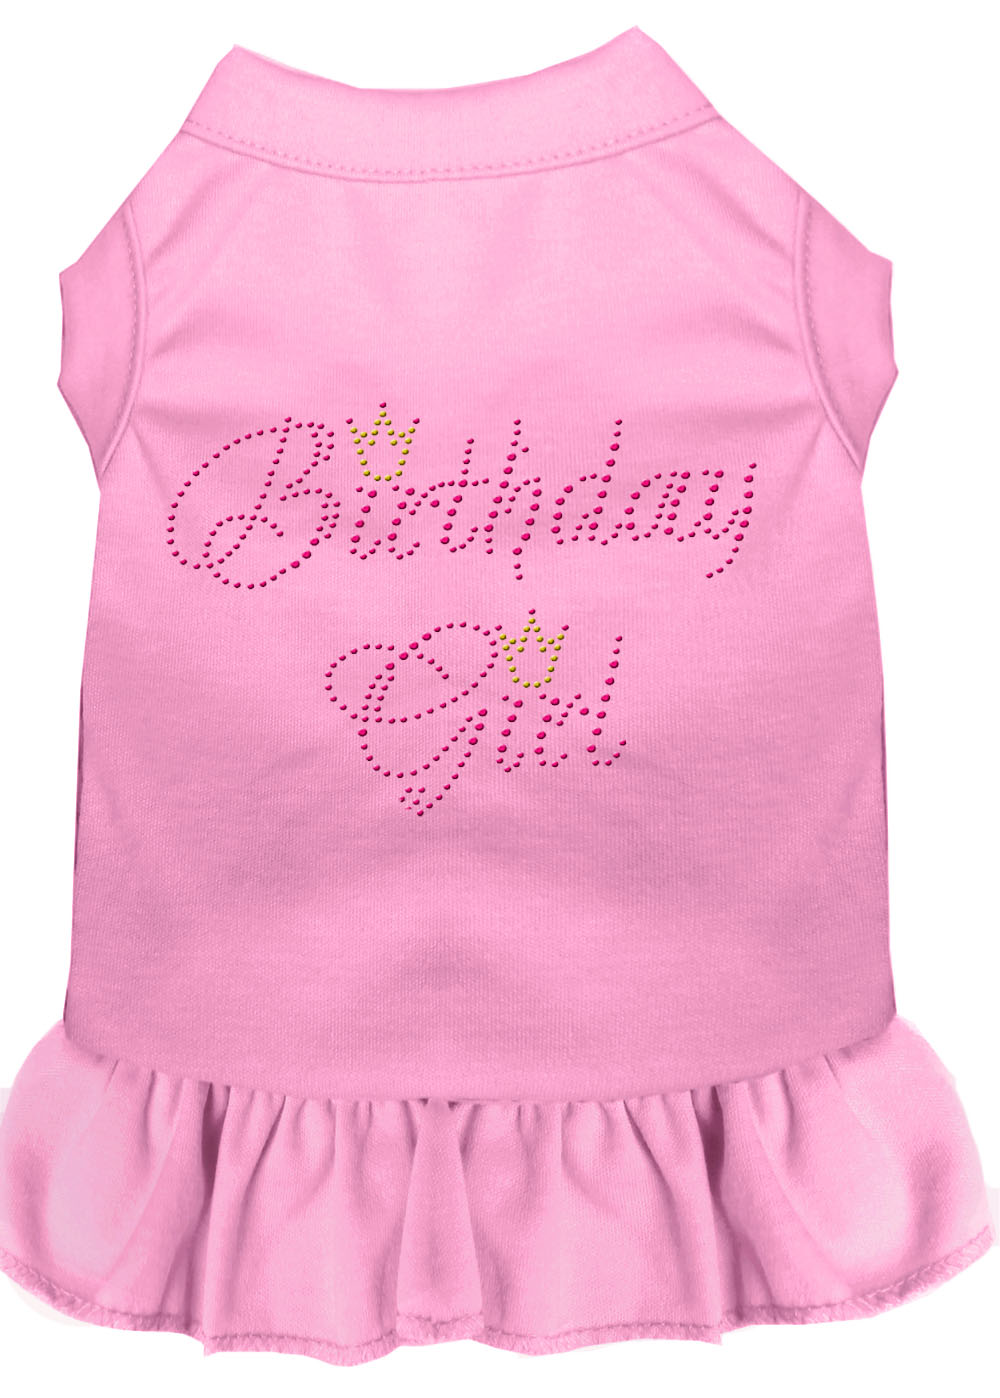 Birthday Girl Rhinestone Dress Light Pink Sm